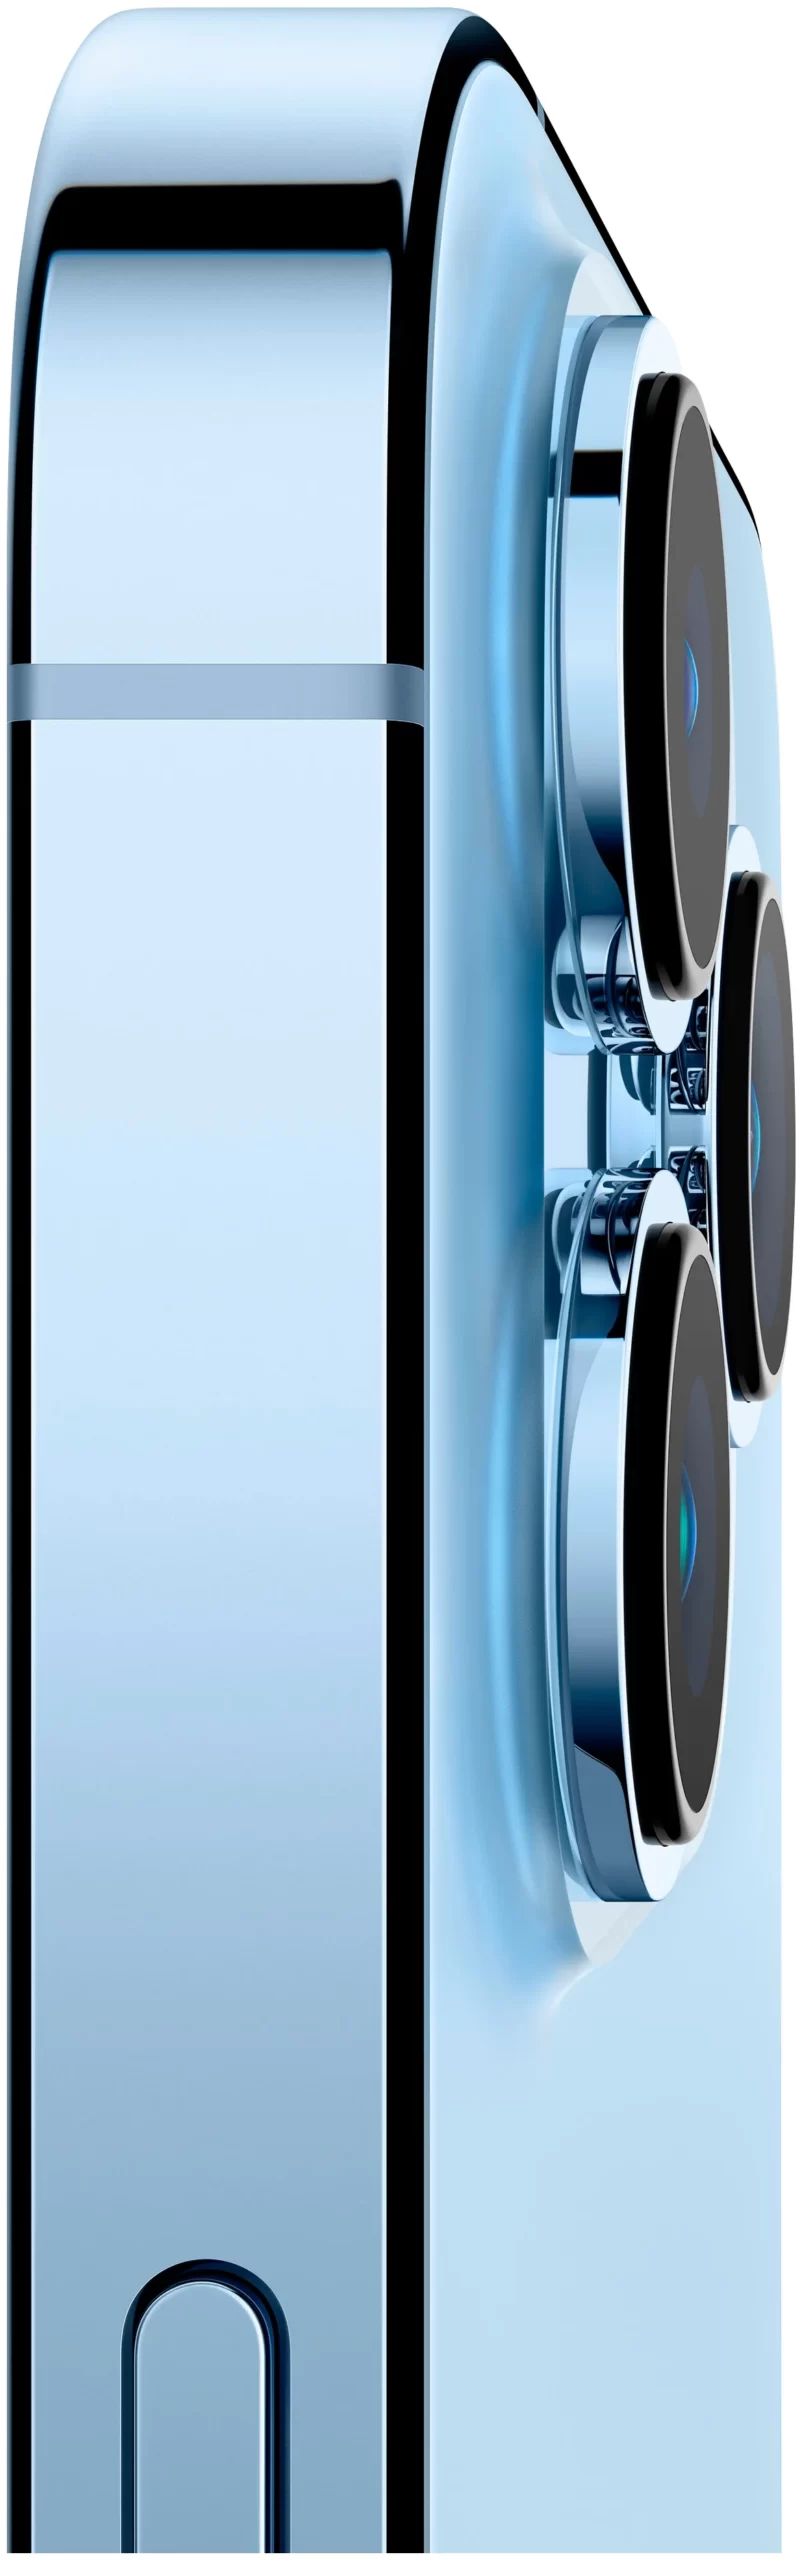 Apple iPhone XR в корпусе 13 Pro 64 ГБ Небесно‑голубой купить дешево онлайн  по низкой цене в Улан-Удэ